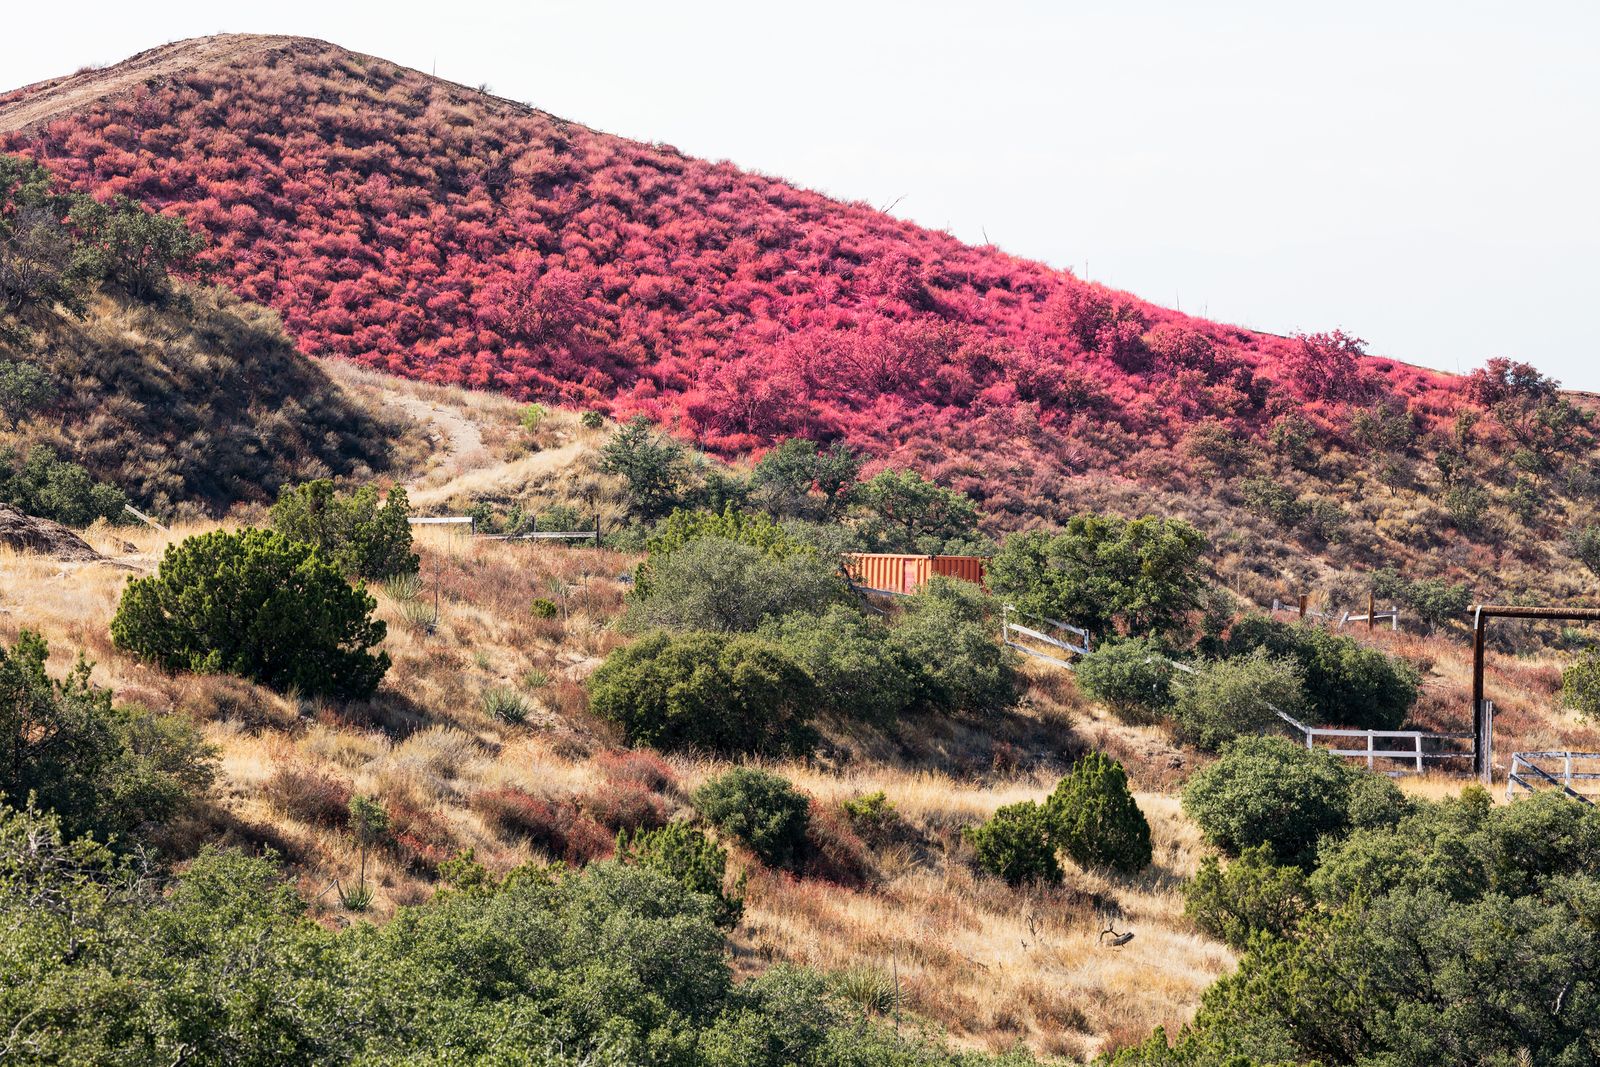 © Anastasia Samoylova - Pink-hued fire-retardant covering the hills of Tick Canyon, Santa Clarita, CA